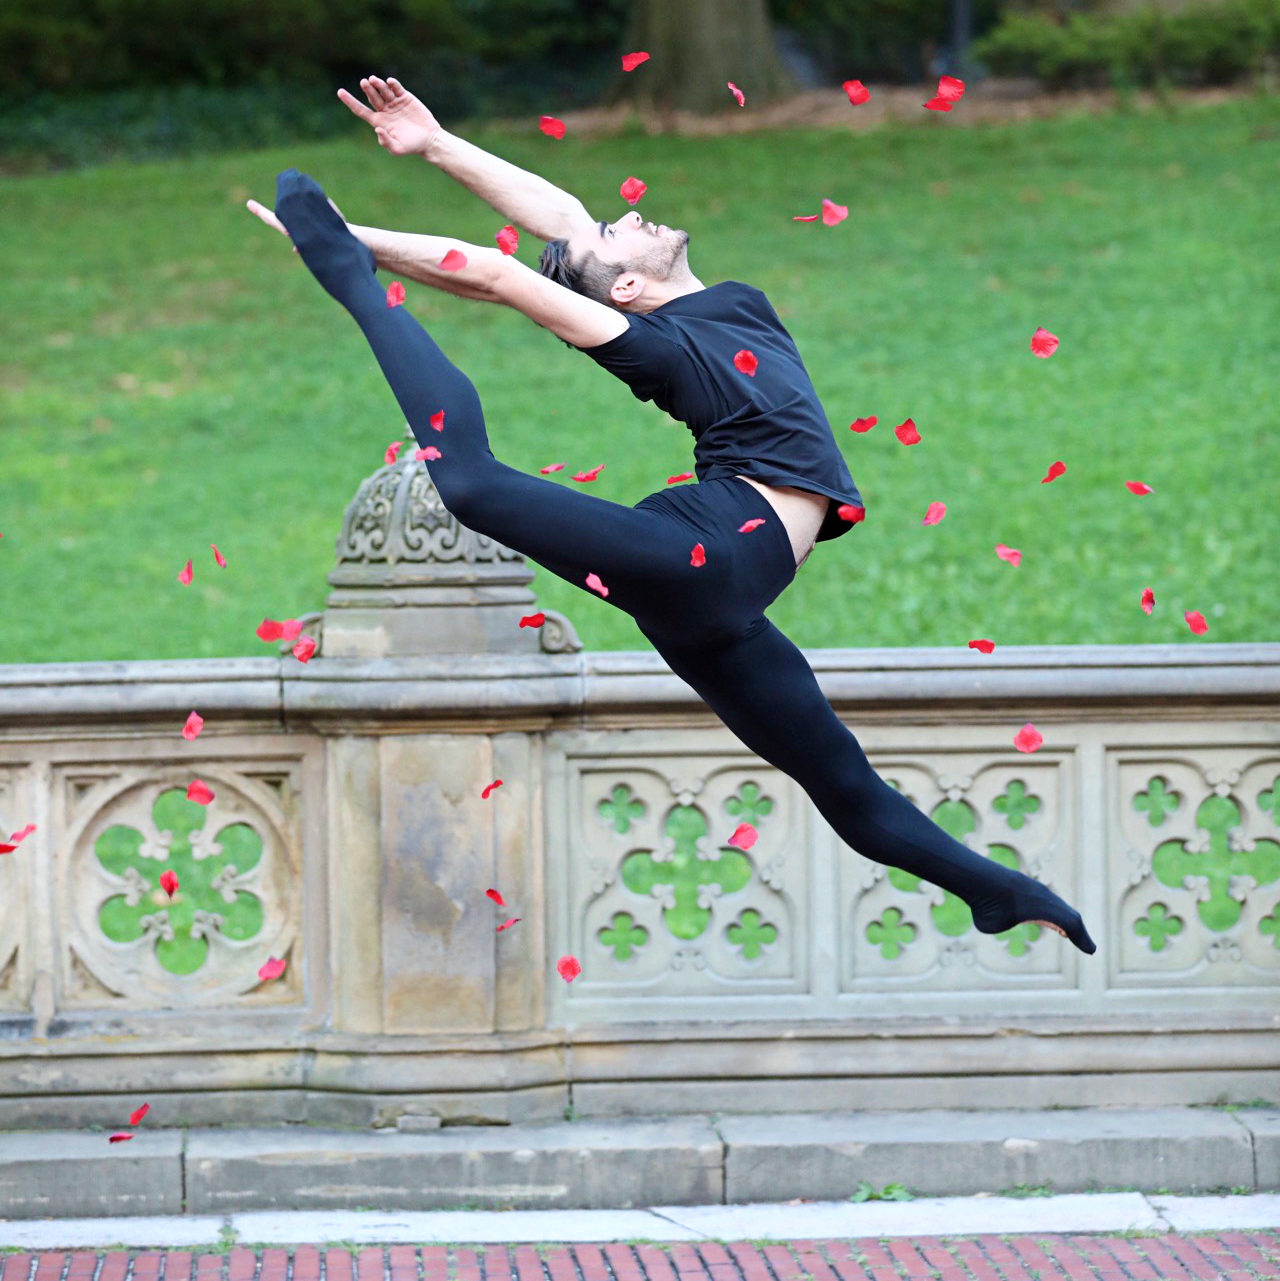 male dancer performing firebird jump in park 